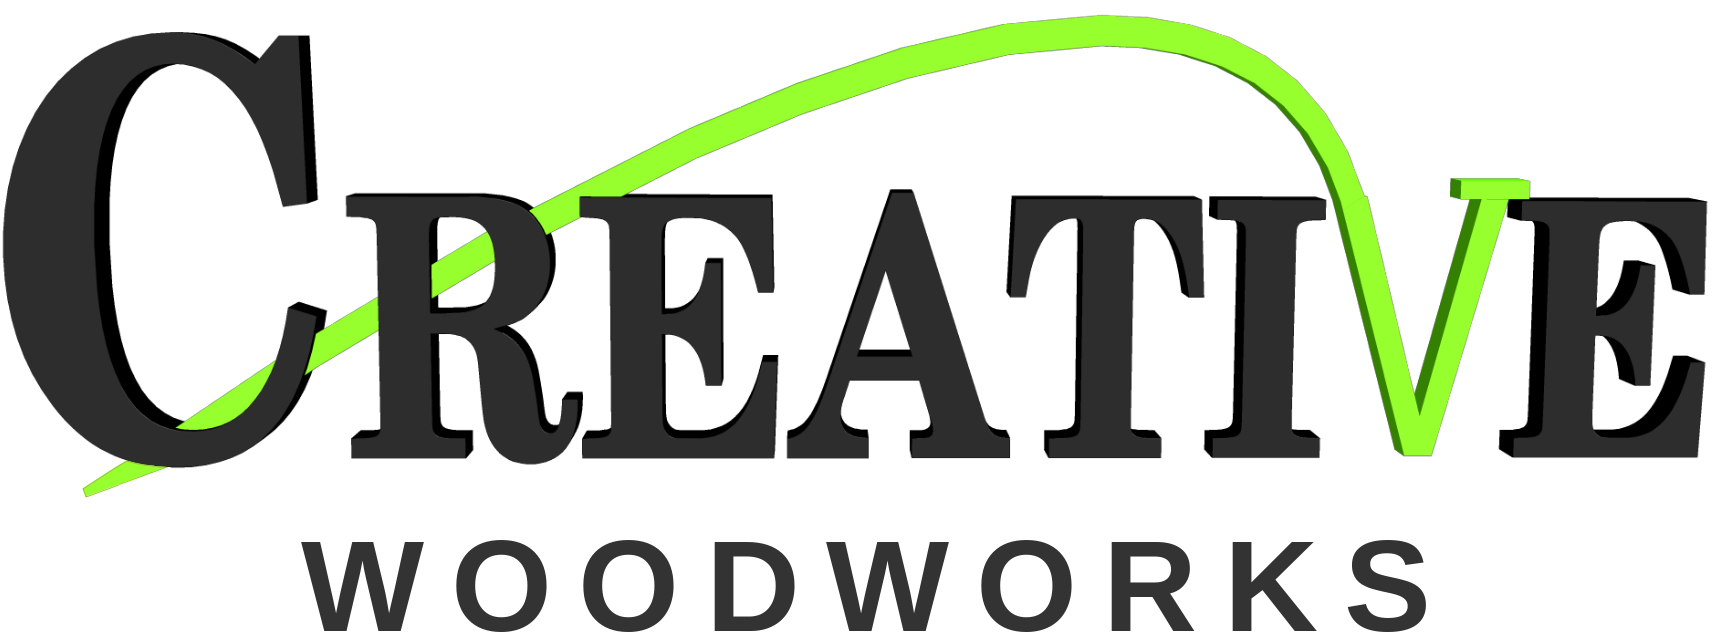 Creative Woodworks LLC